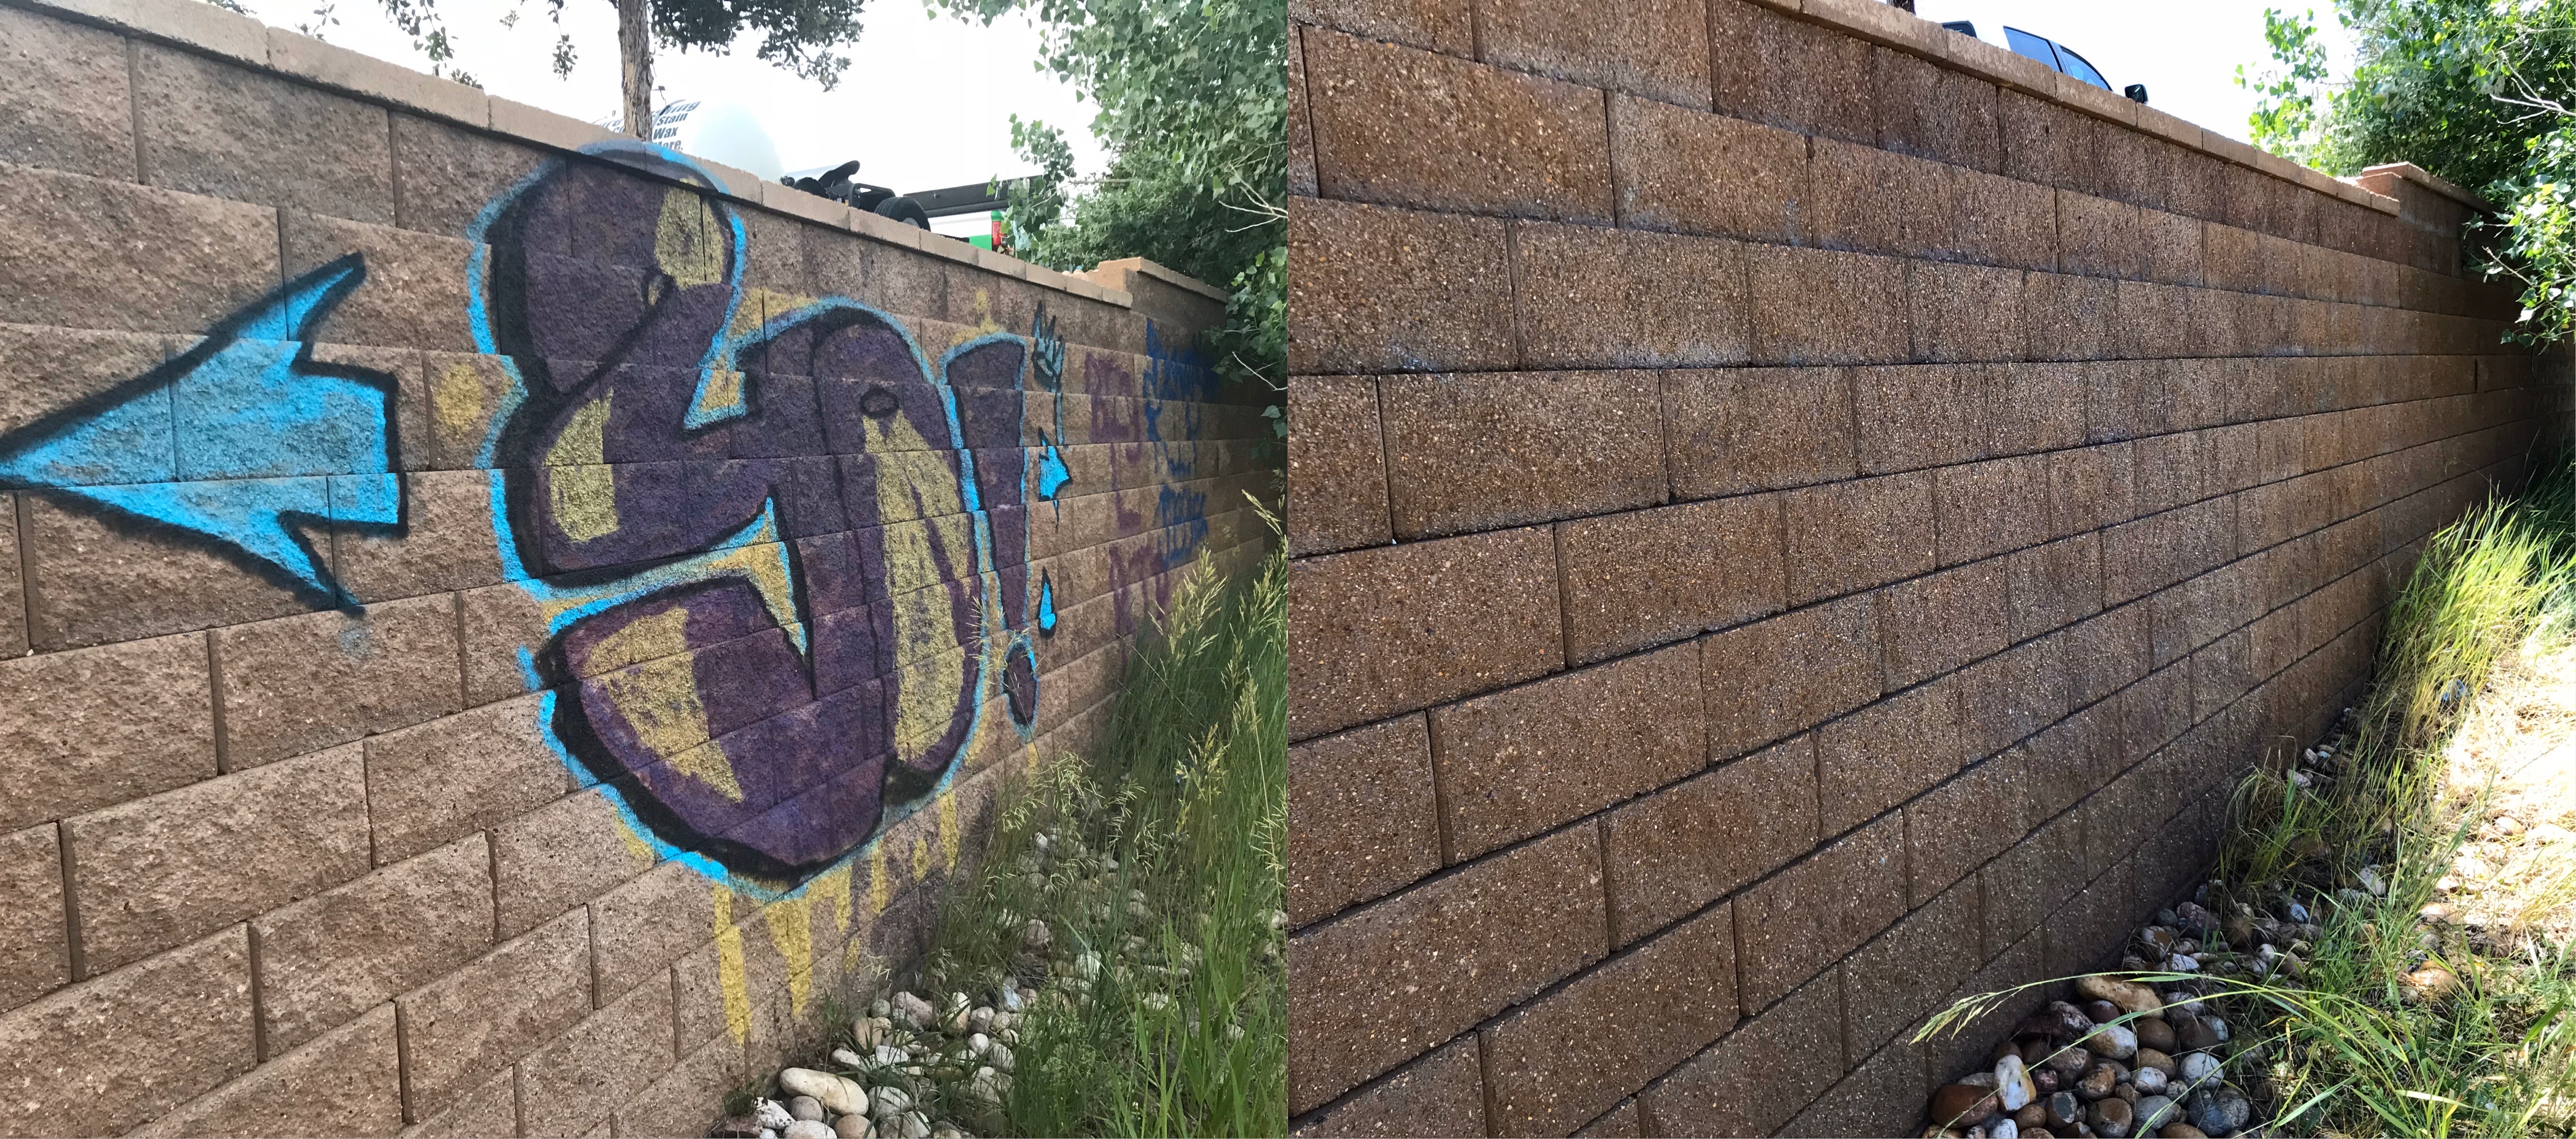 Graffiti Removal Fort Collins, Loveland, Greeley, Windsor, Longmont, Berthoud, Wellington, Estes Park, Cheyenne Wyoming and surrounding areas.